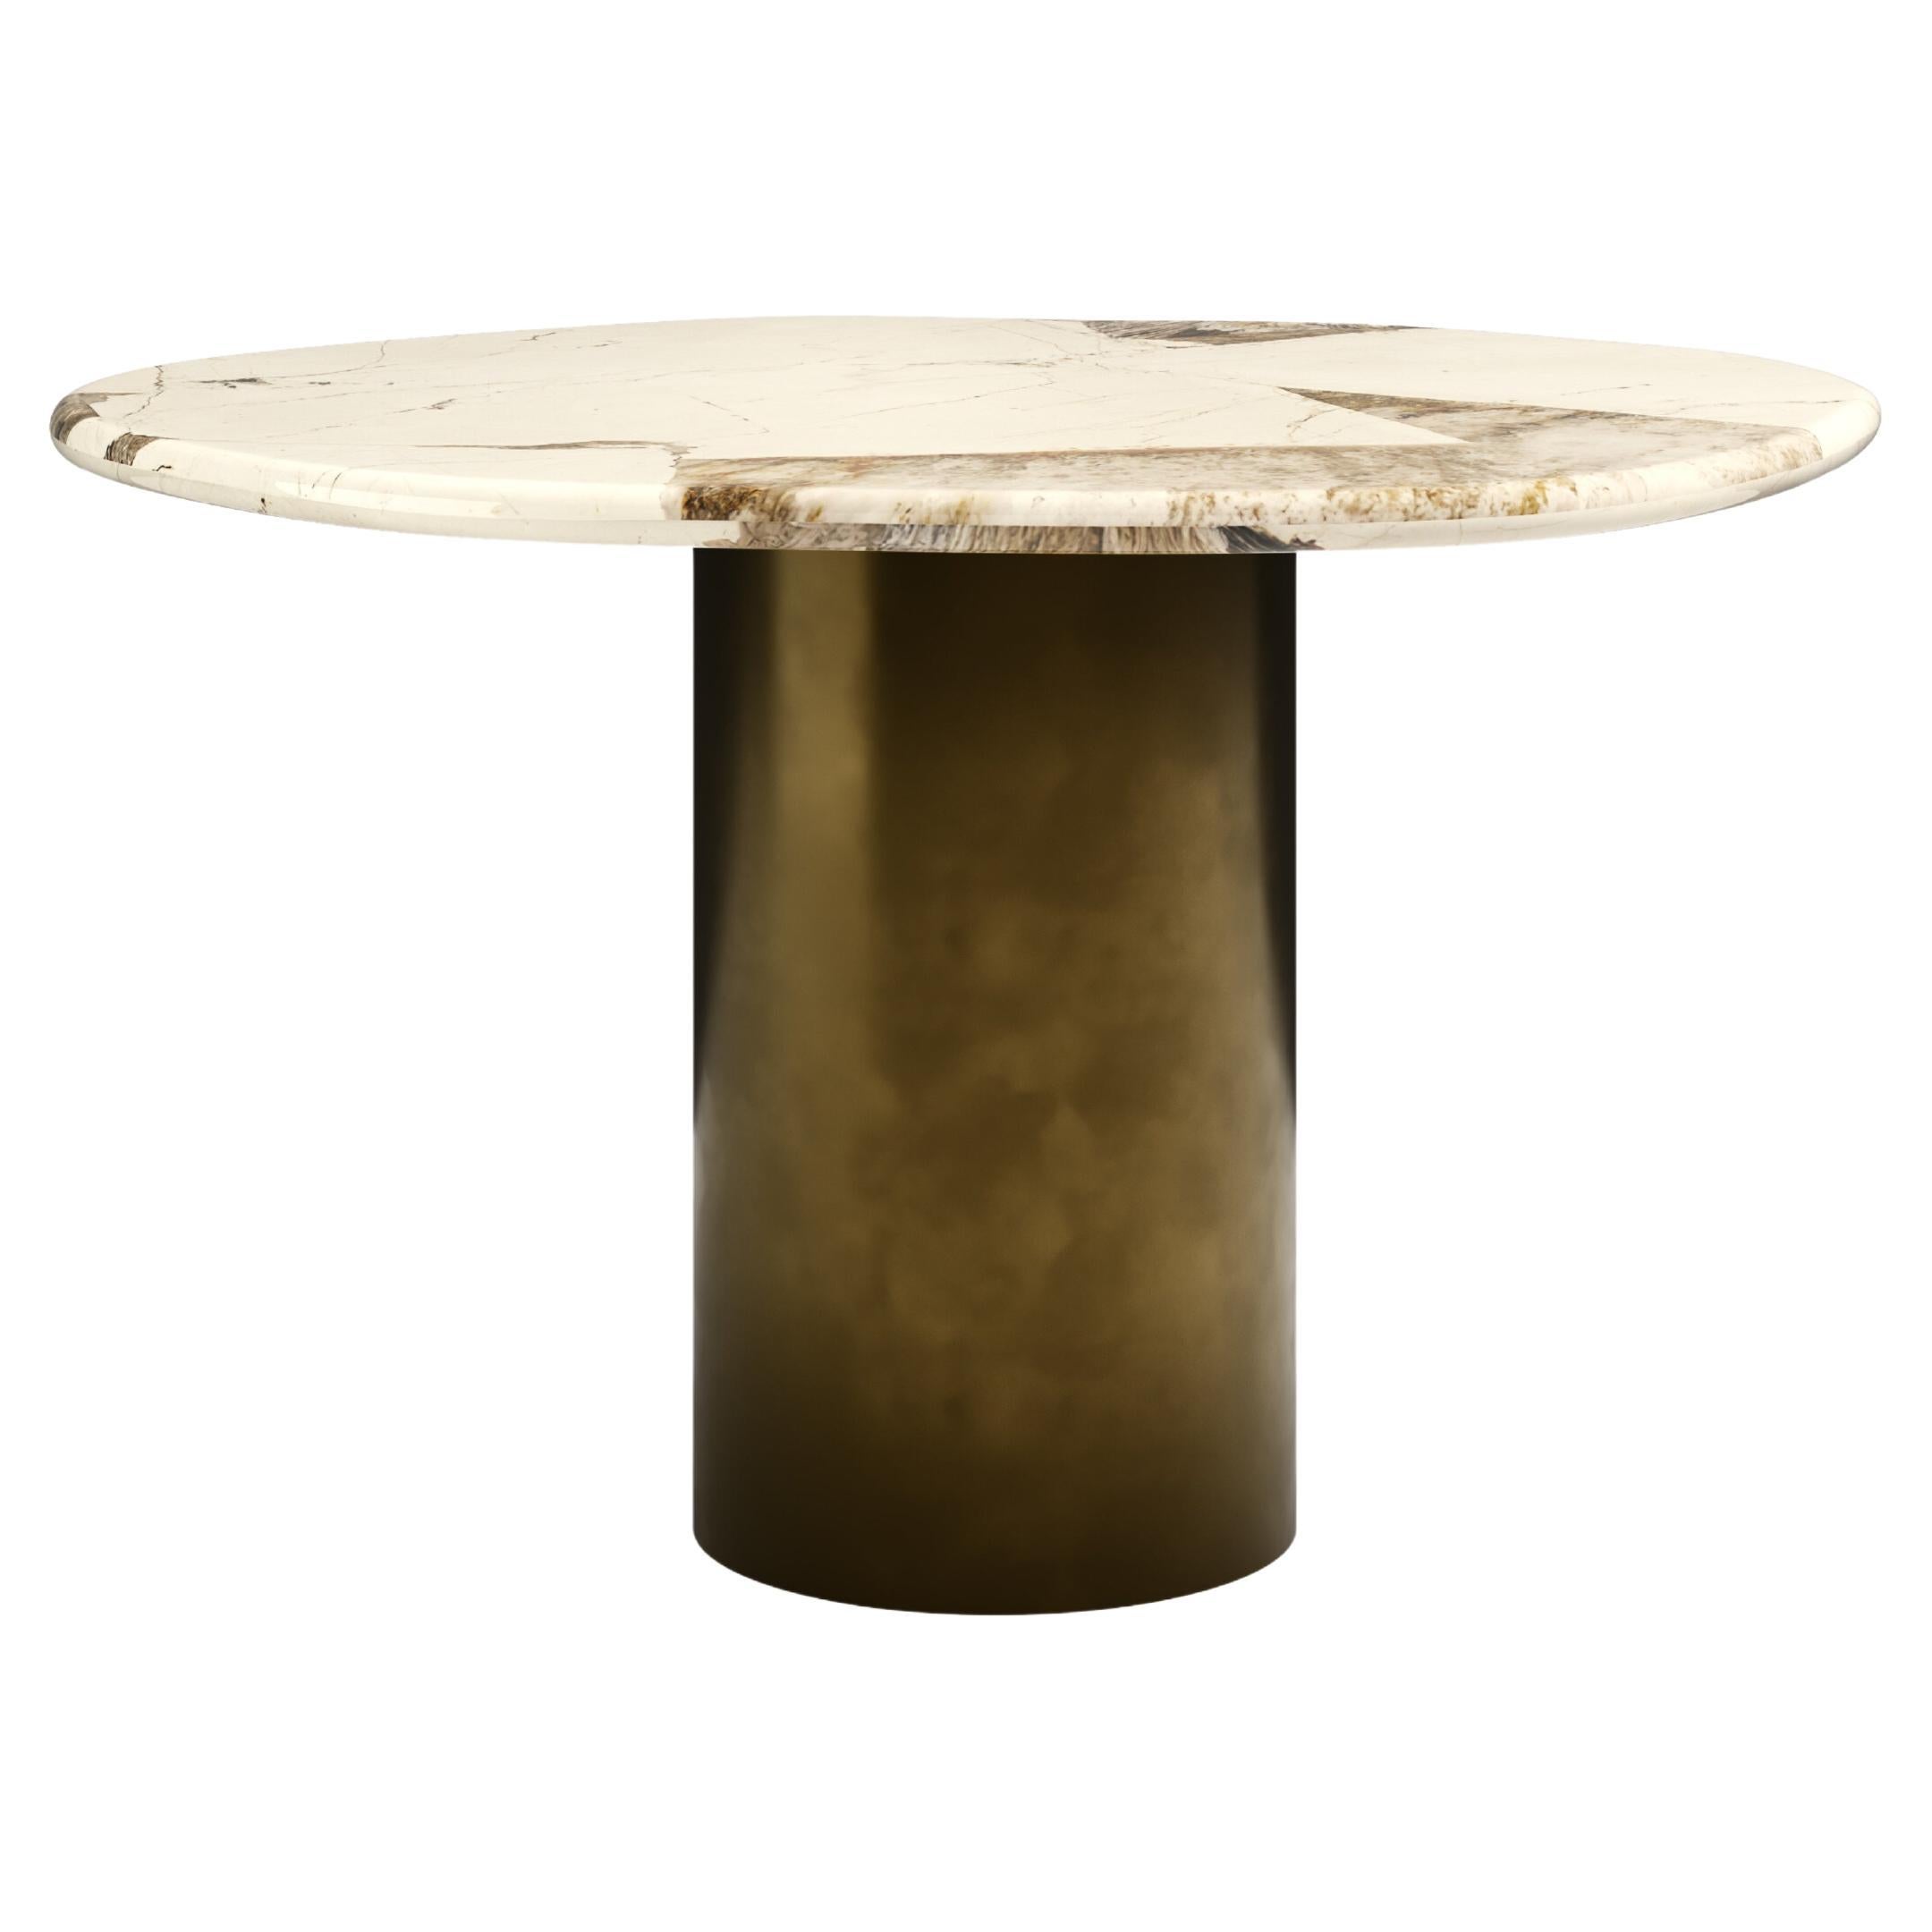 FORM(LA) Lago Round Dining Table 48”L x 48”W x 30”H Quartzite & Antique Bronze For Sale